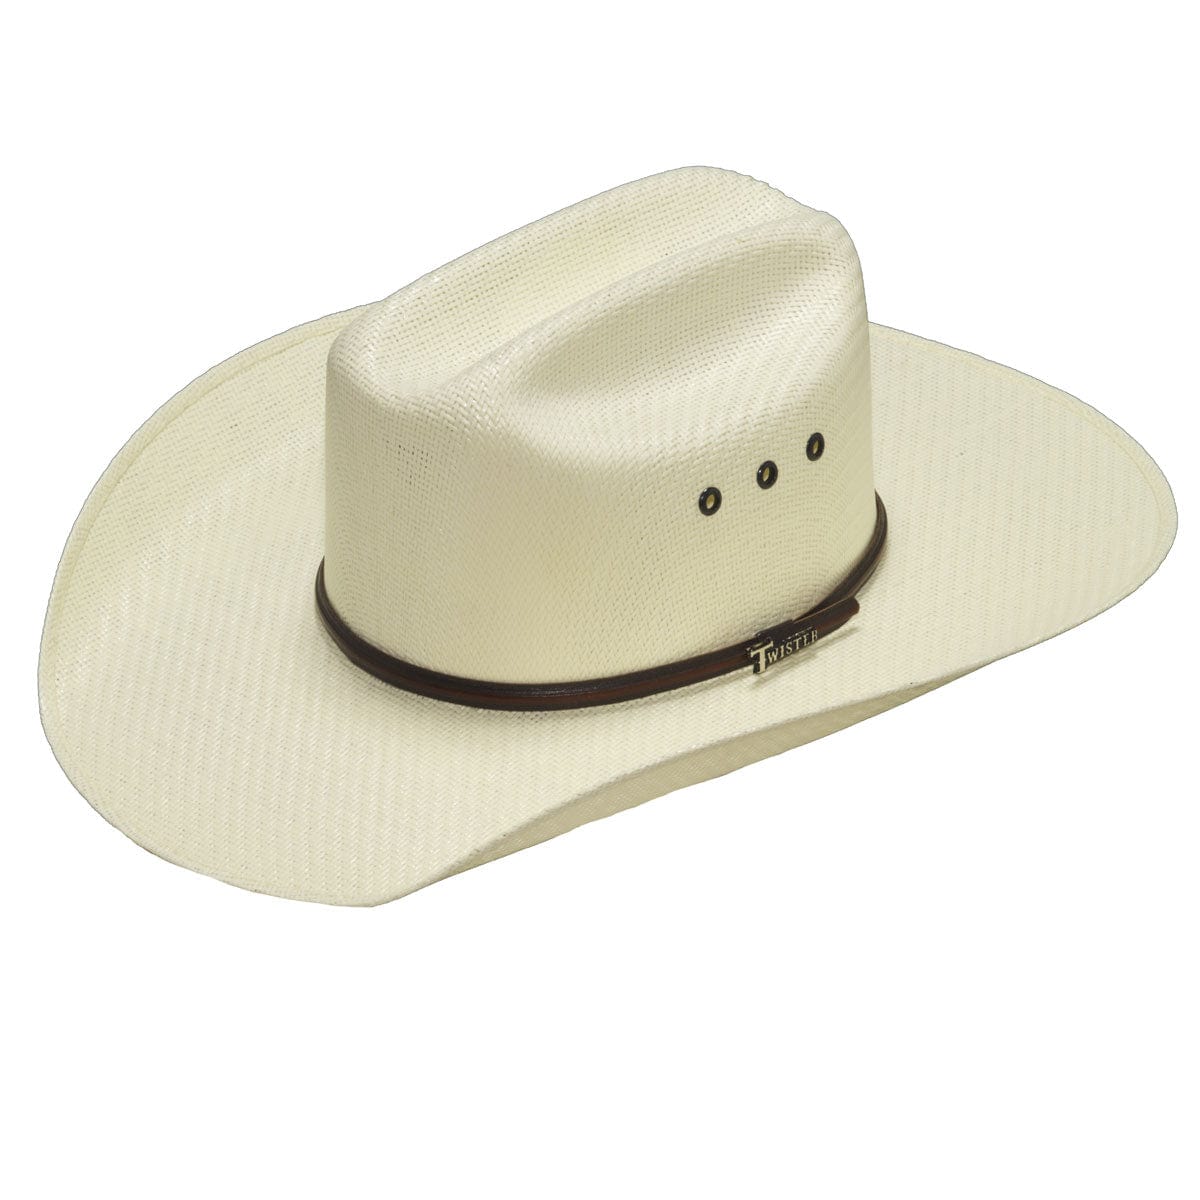 Western Cowboy Hats For Men Online